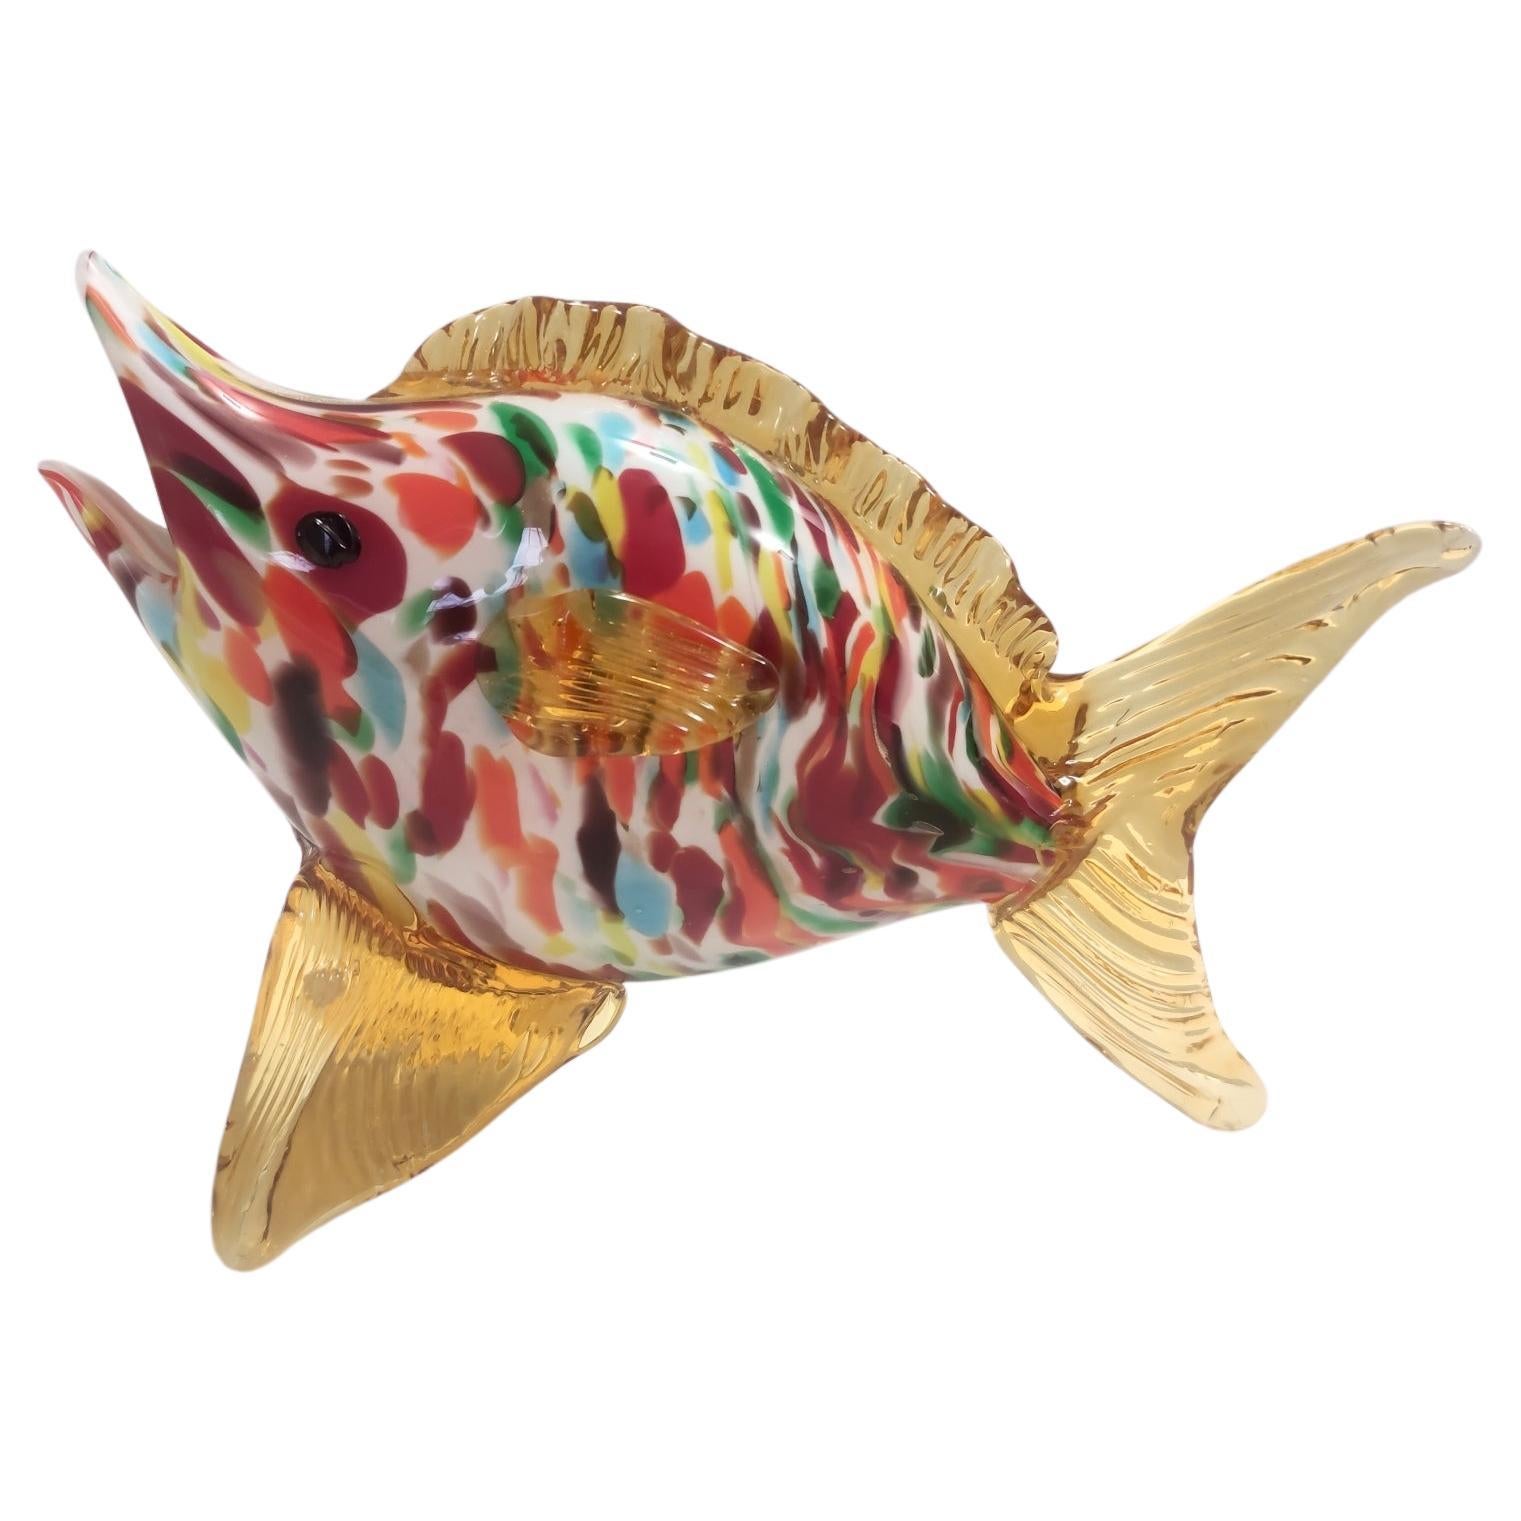 Vintage Multicolored Murano Glass Fish Decorative Figurine by Fratelli Toso For Sale